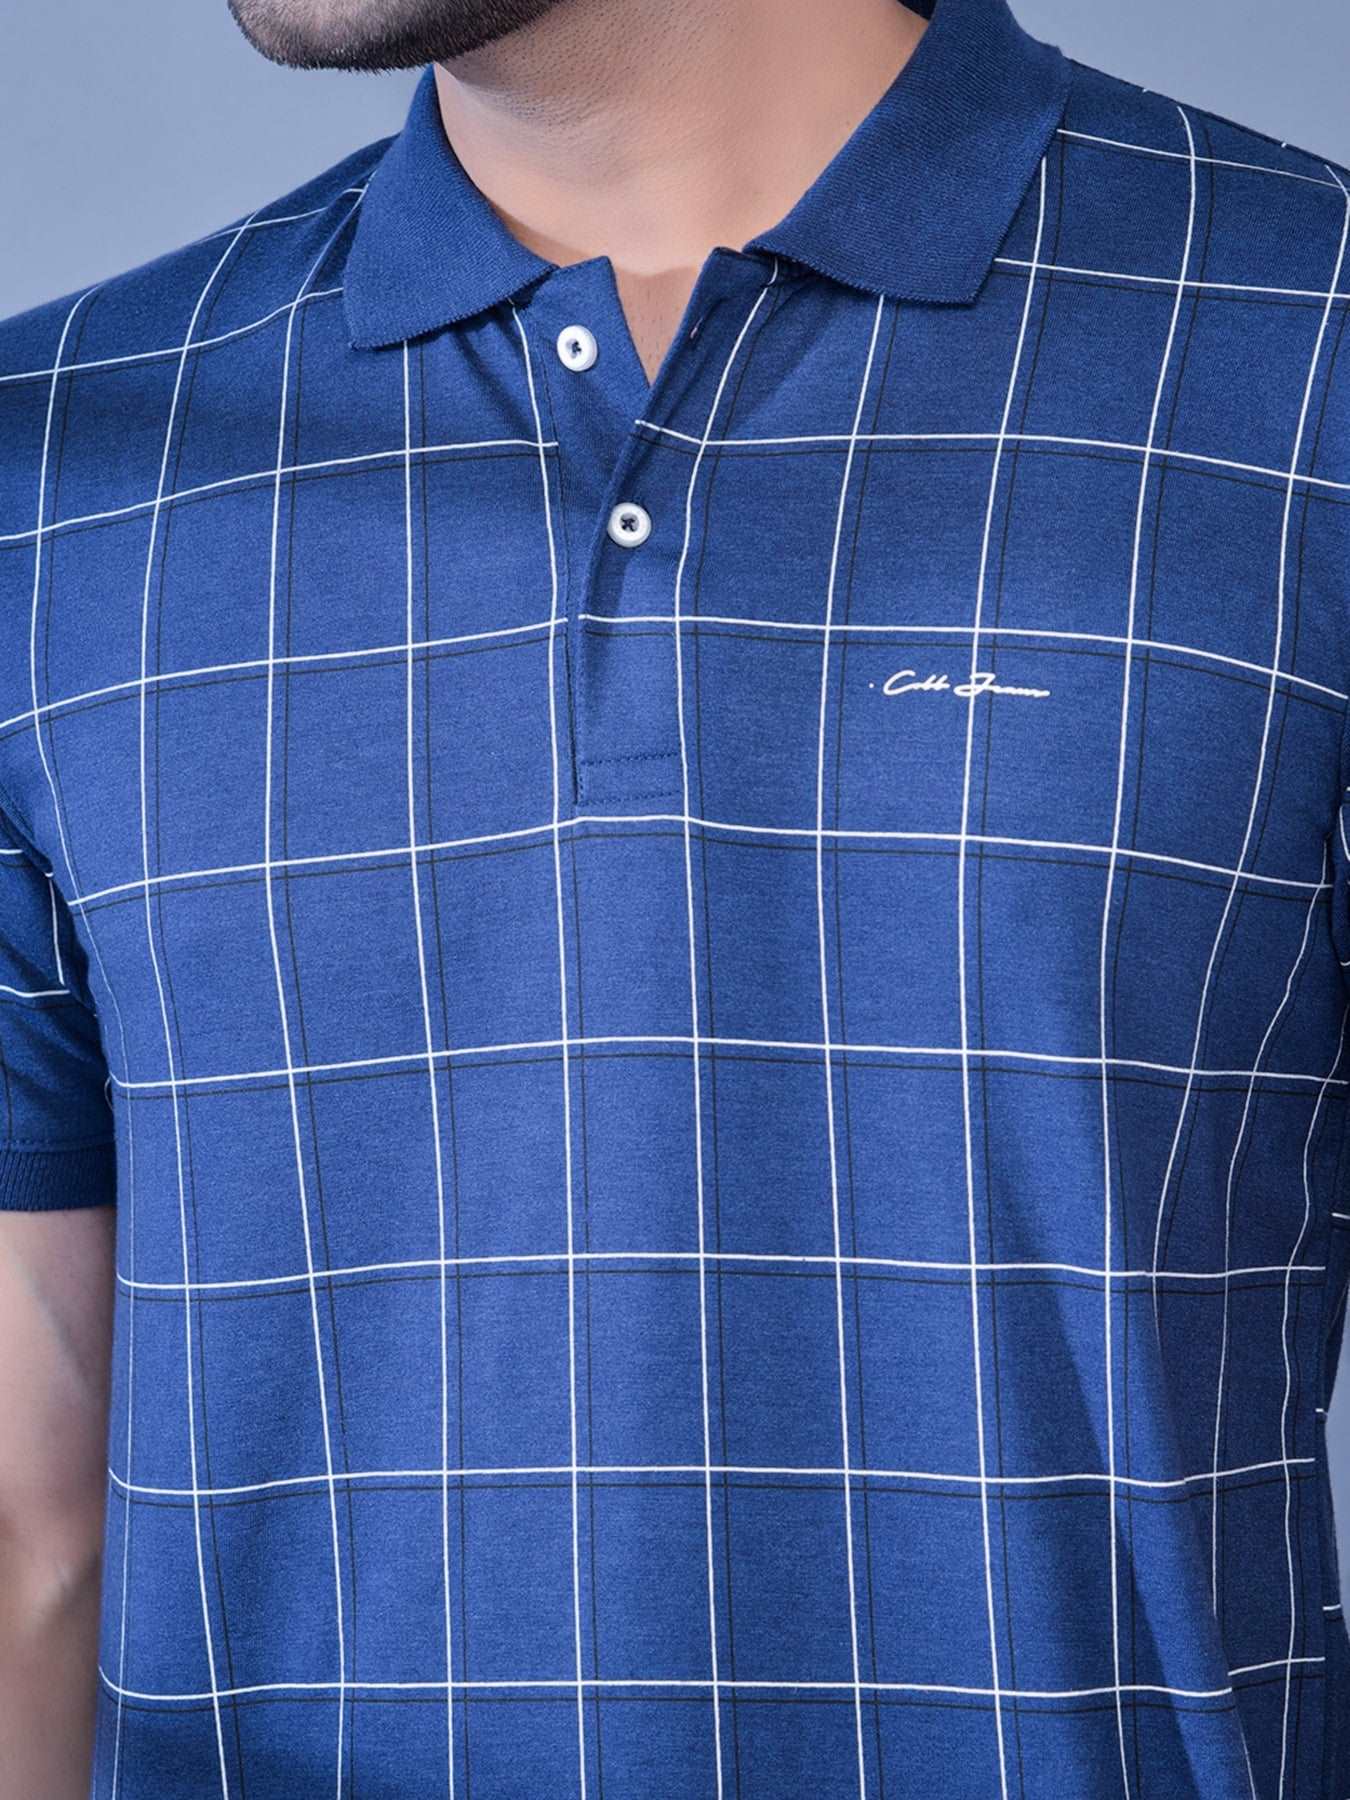 Cobb Blue Check Polo Neck T-Shirt